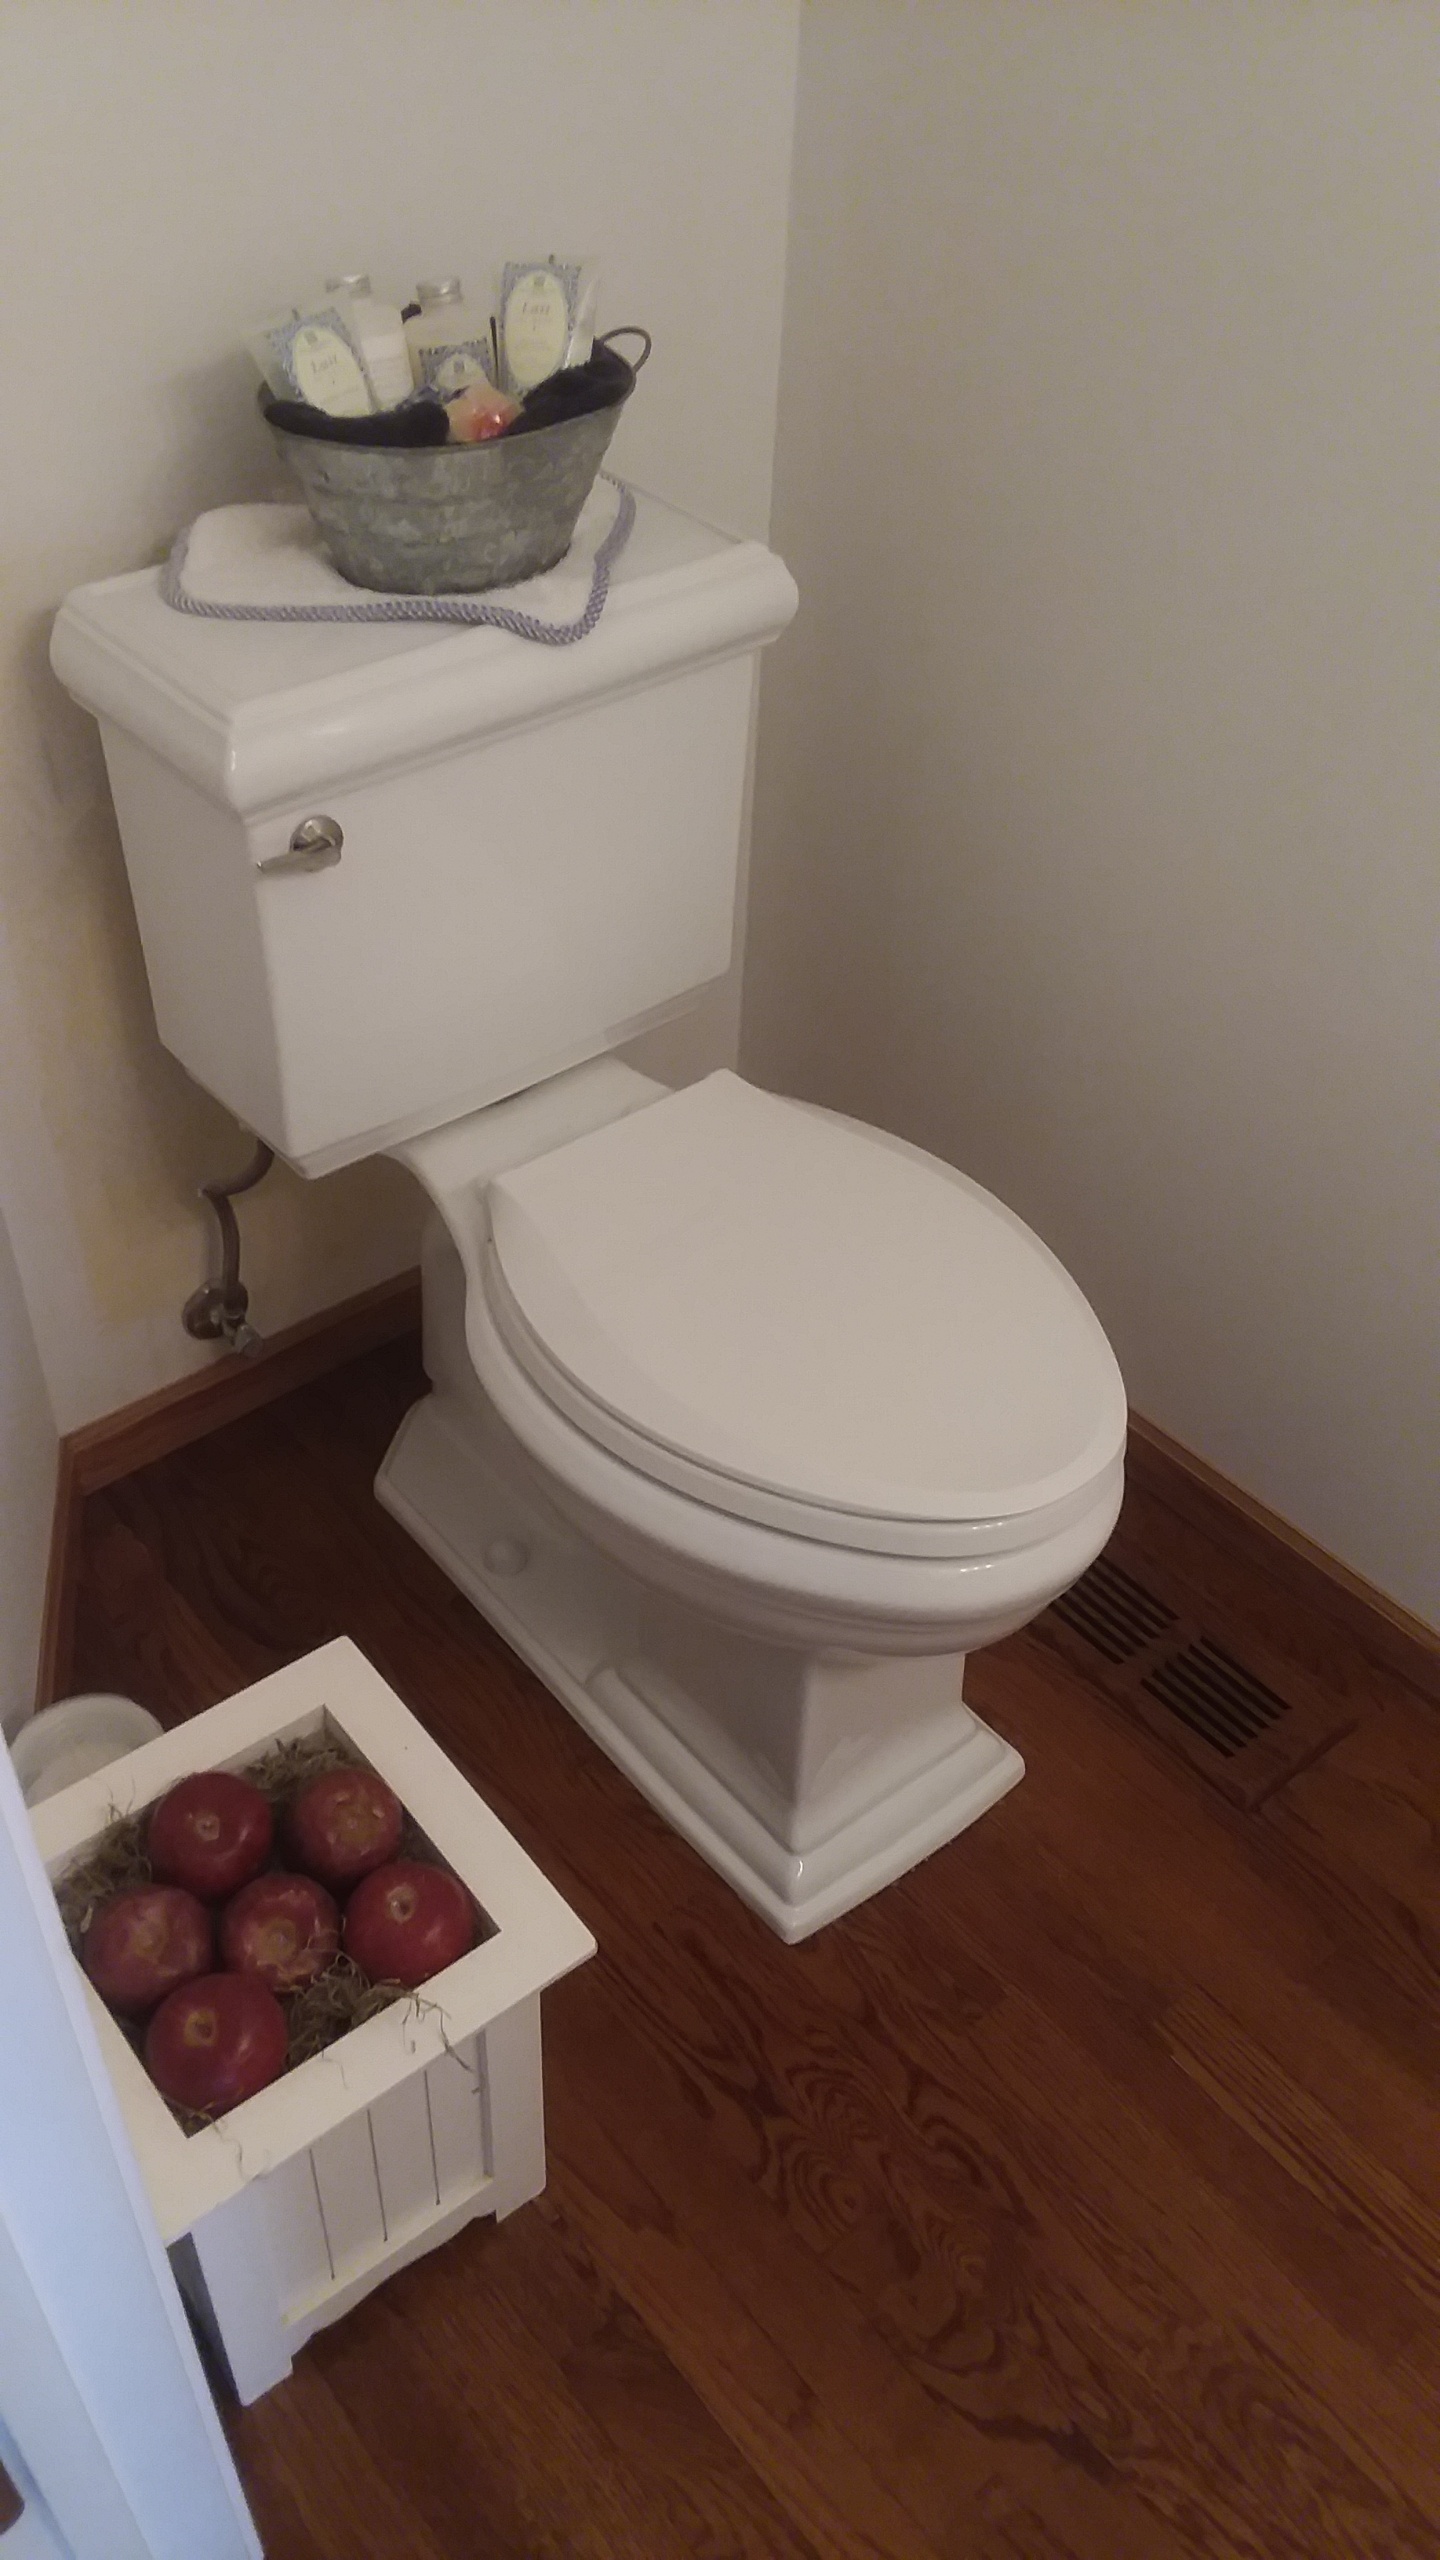 Palatine toilet install